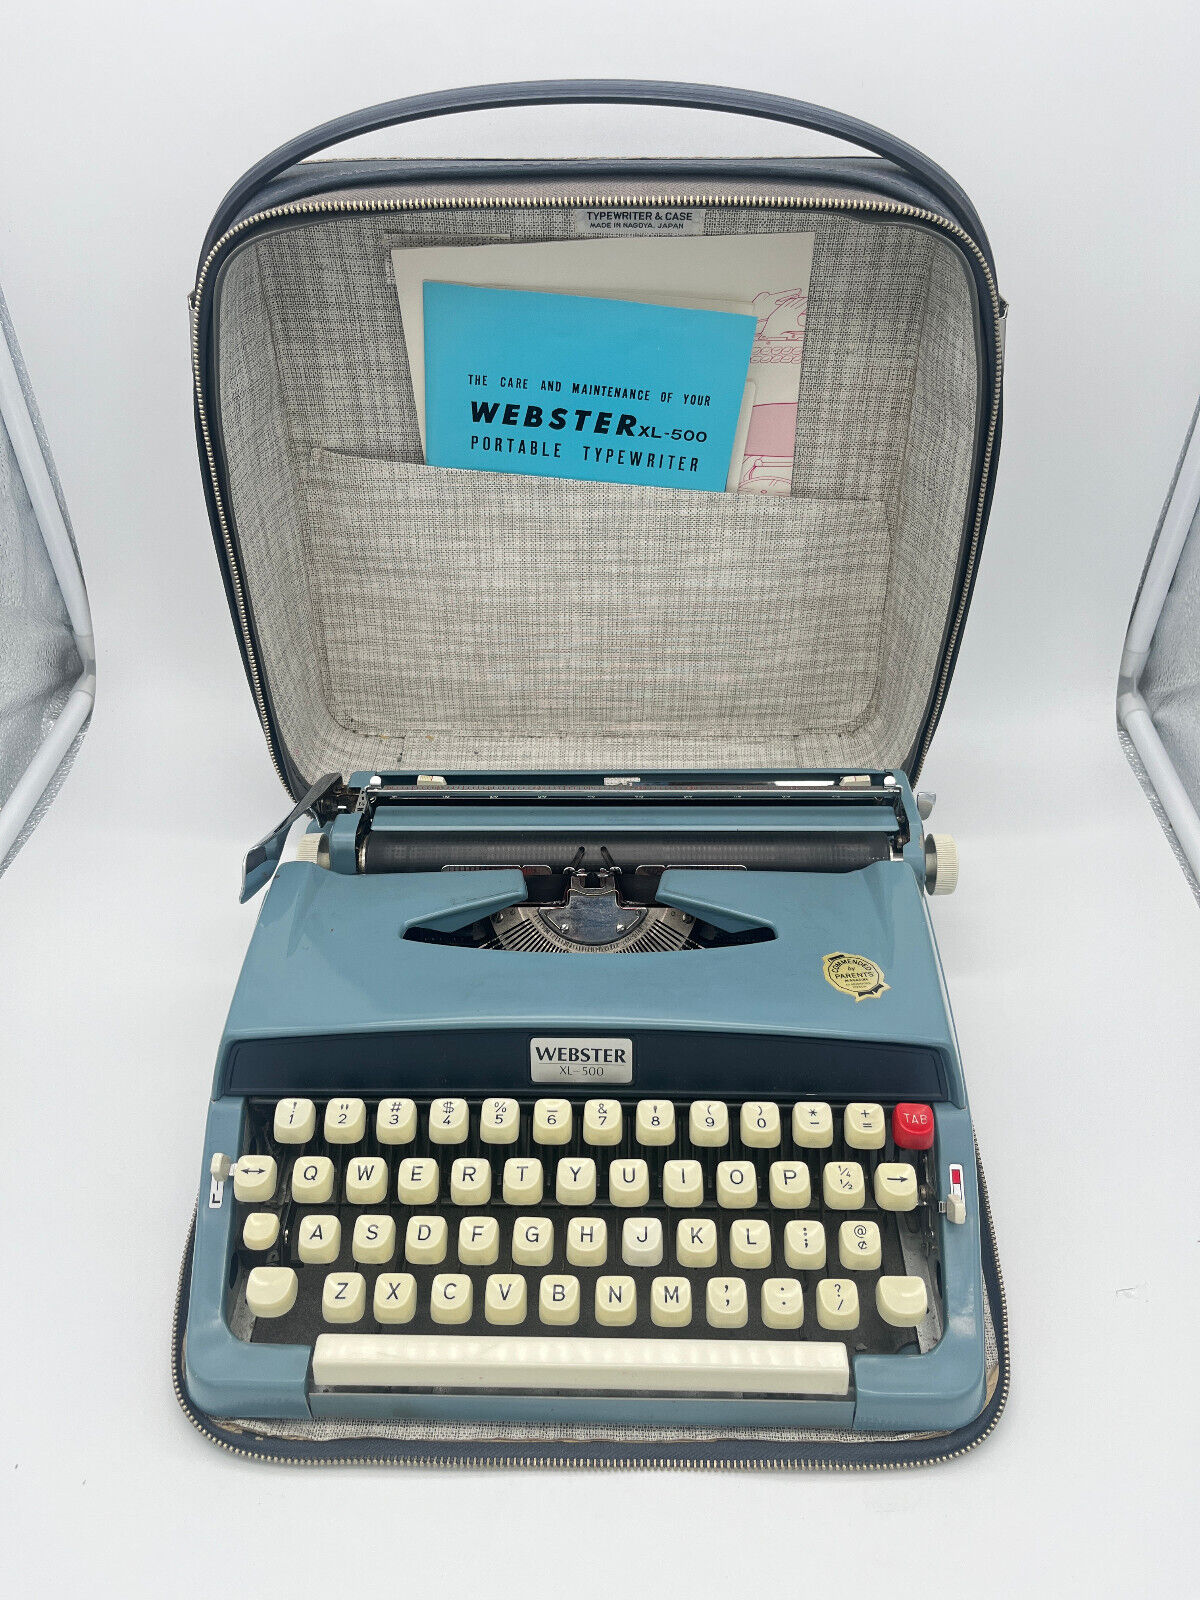 Brother Webster XL-500 Blue Portable Manual Typewriter Case Owners Manual VTG